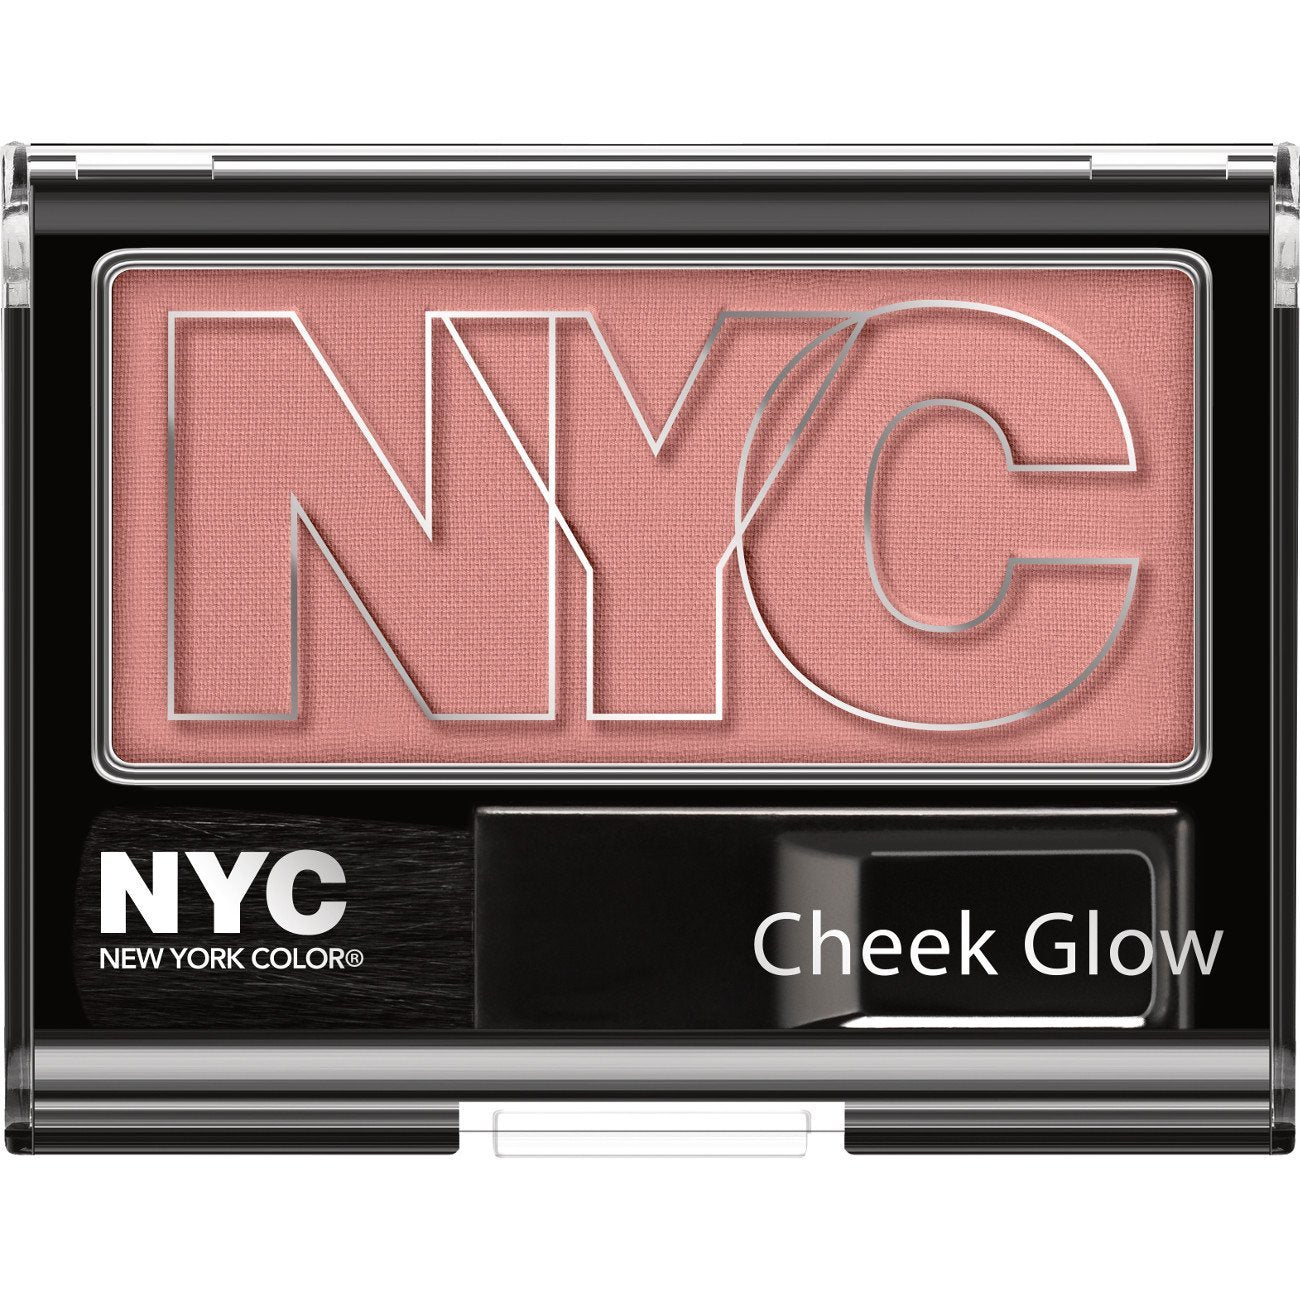 Buy  NYC Cheek Glow Powder Blush - at Best Price Online in Pakistan